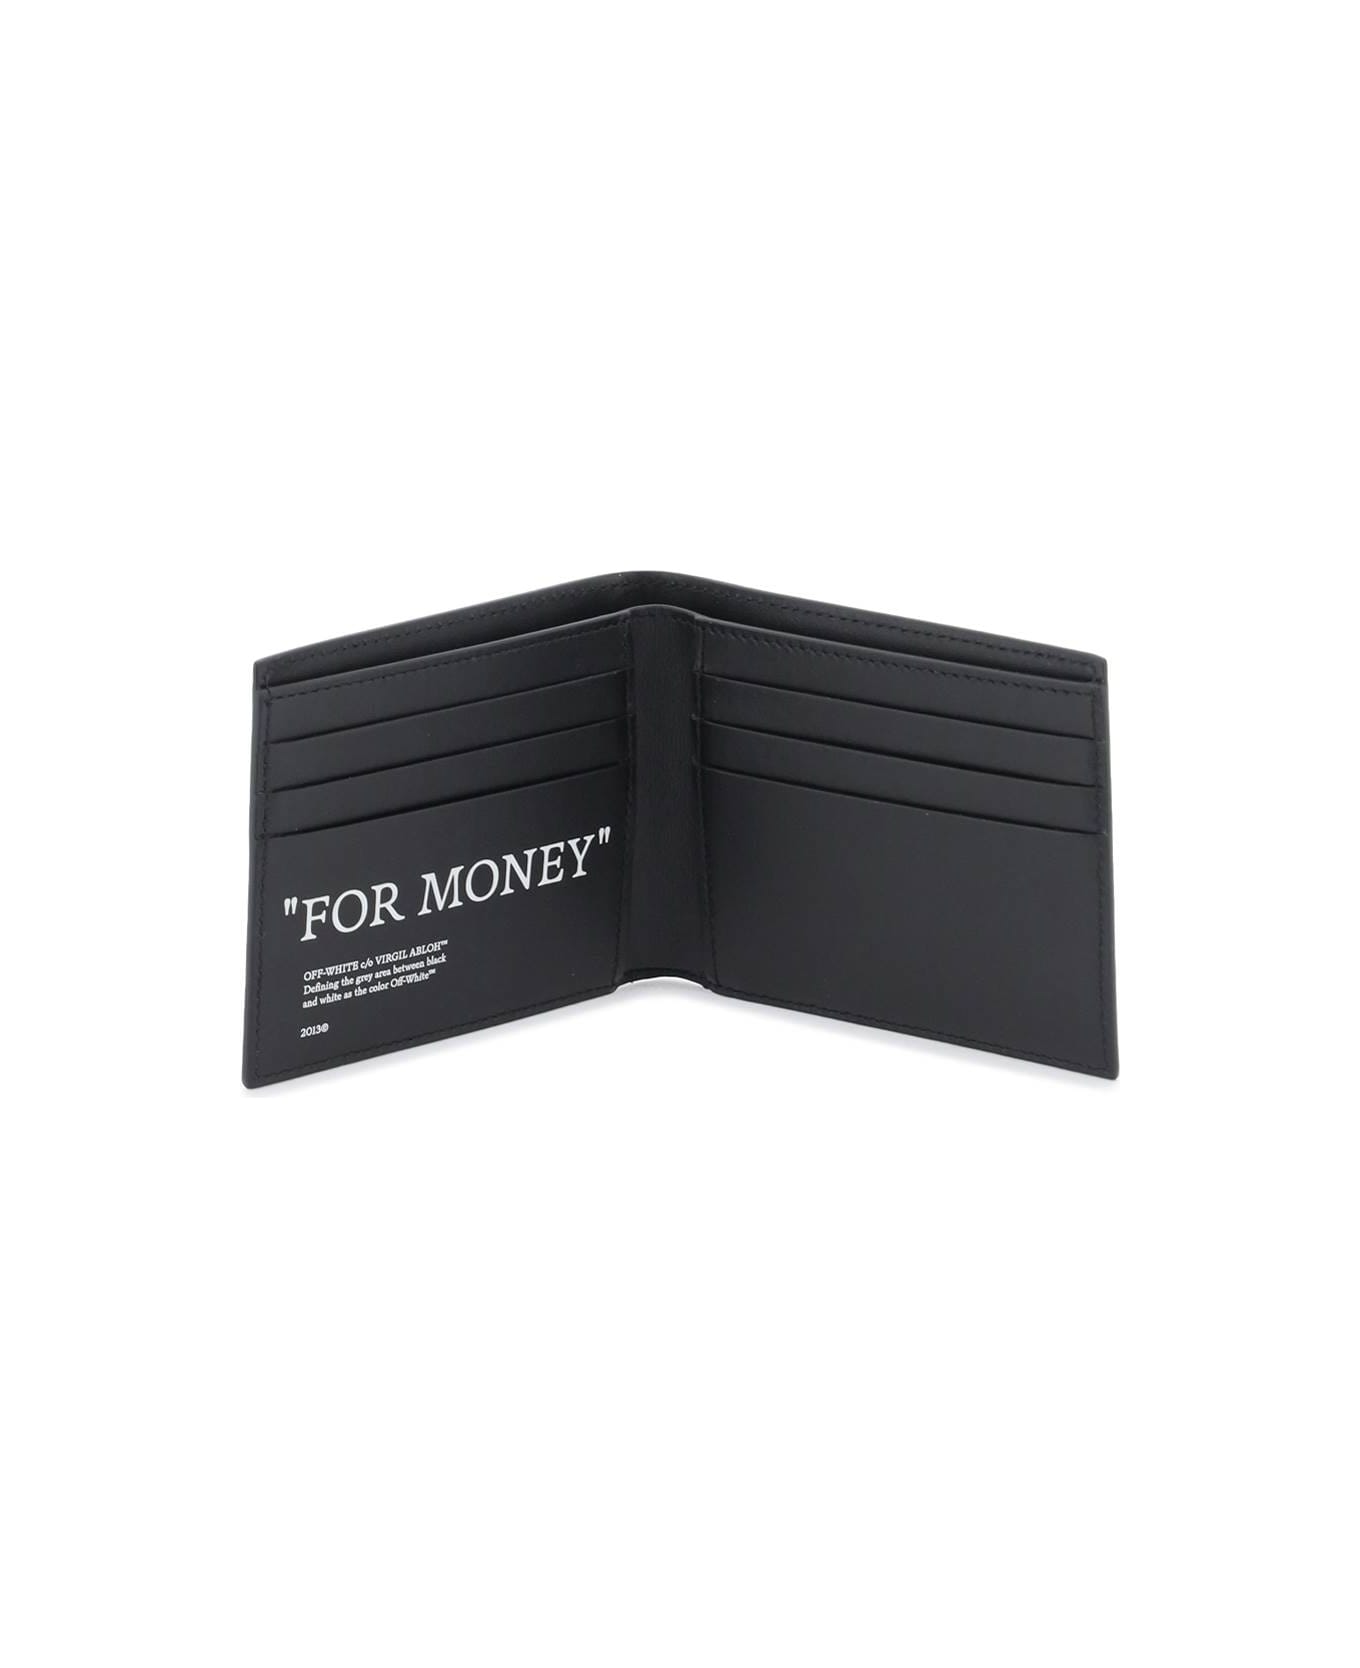 Off-White Bookish Bifold Wallet - Black White 財布